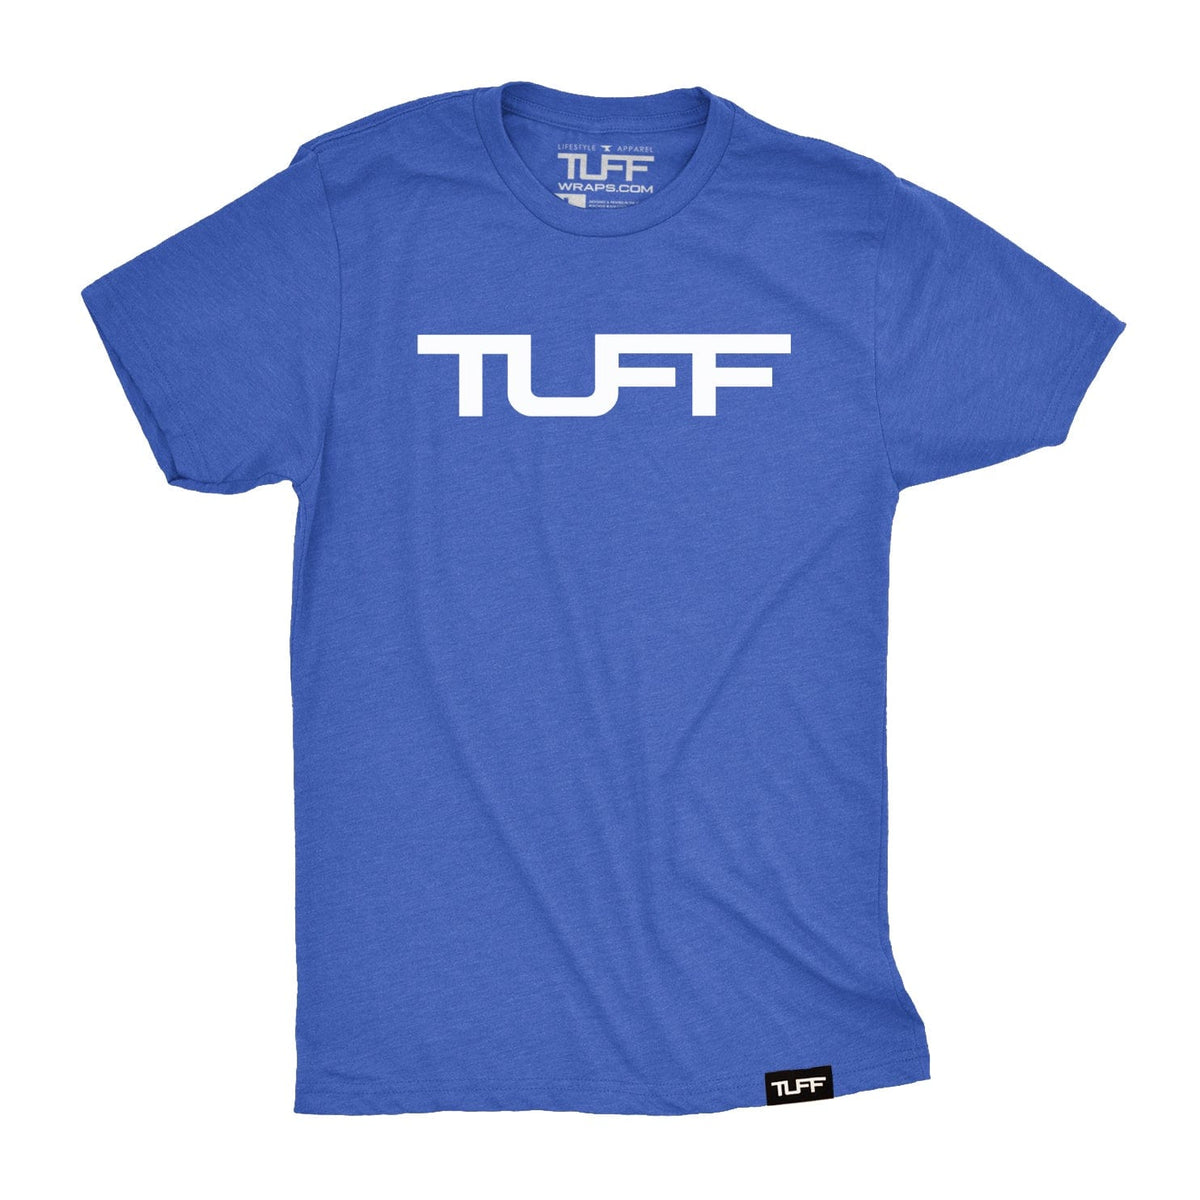 TUFF Logo Tee S / Royal Blue TuffWraps.com